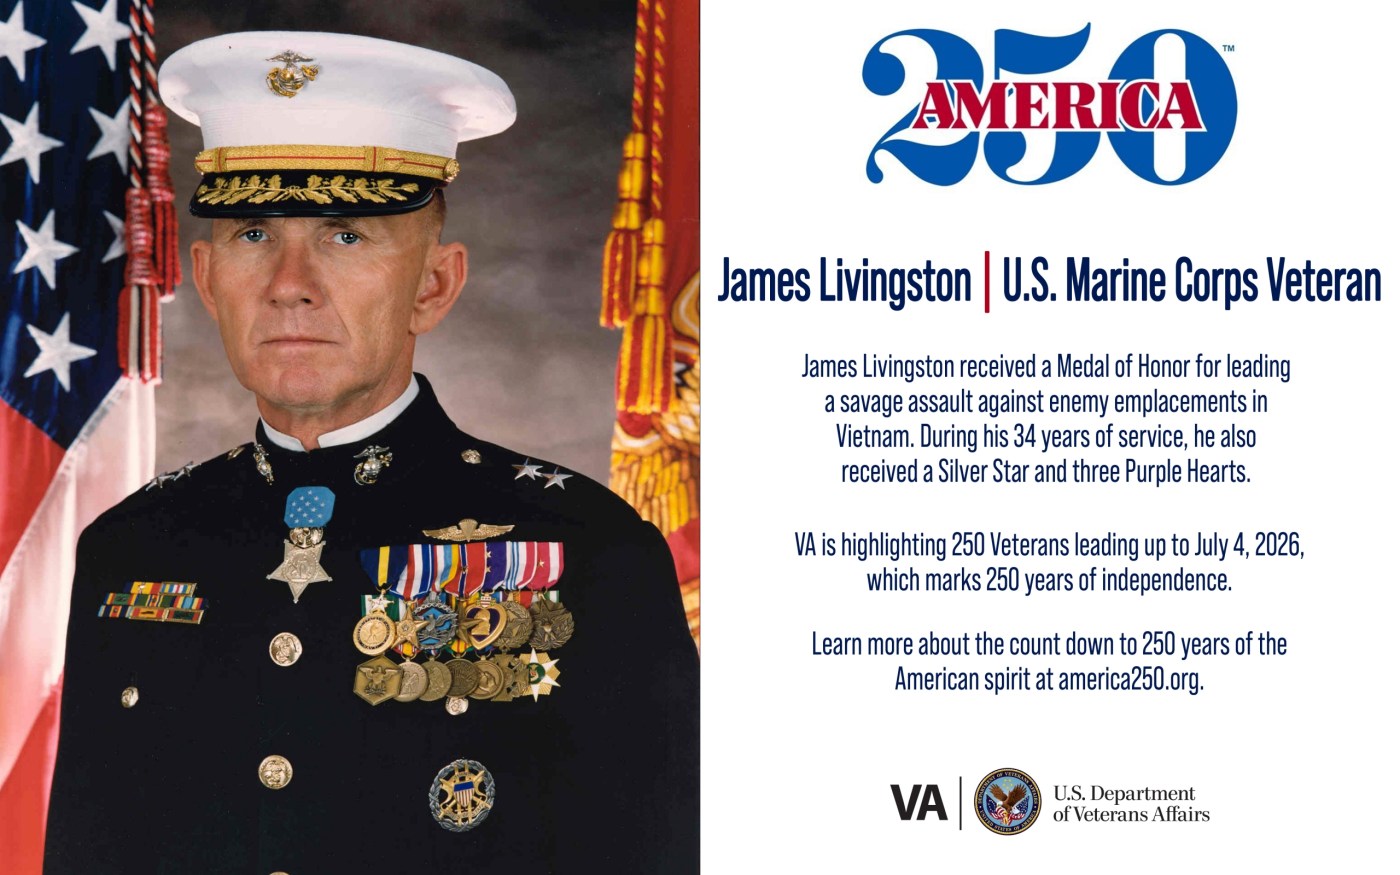 America250: Marine Corps Veteran James Livingston